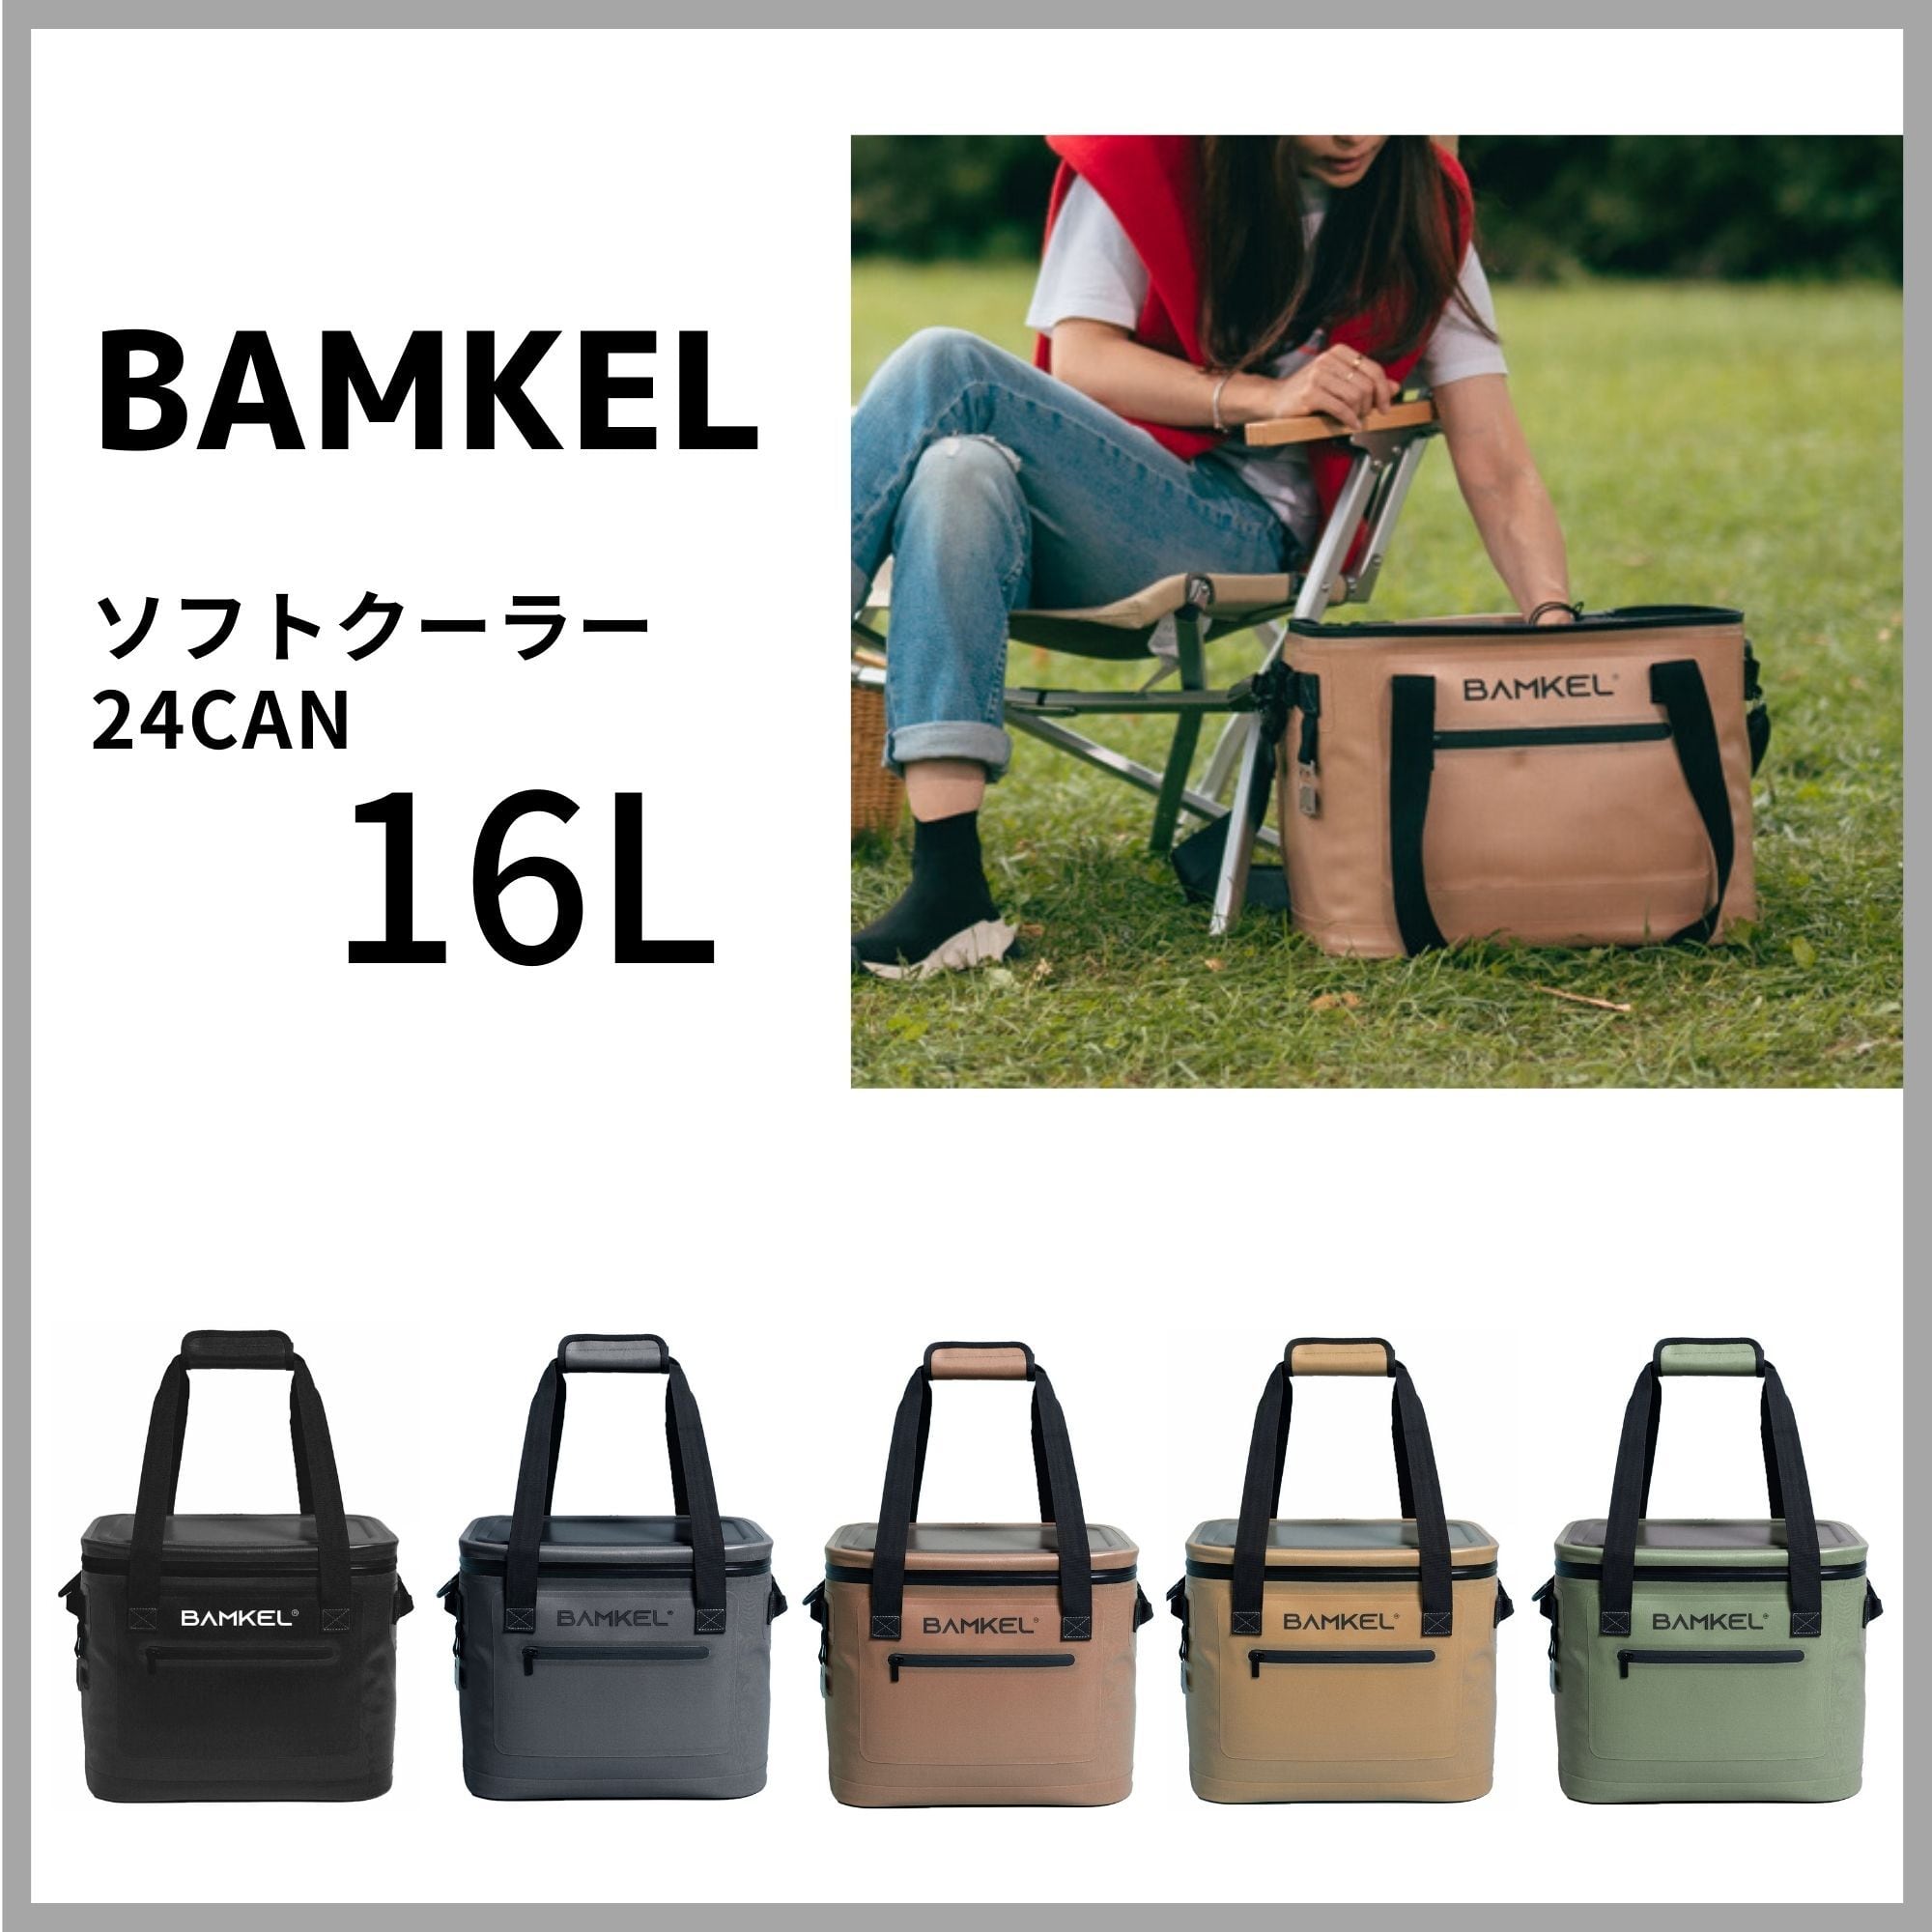 BAMKEL (バンケル) ソフトクーラー (16L) オリーブグリーン